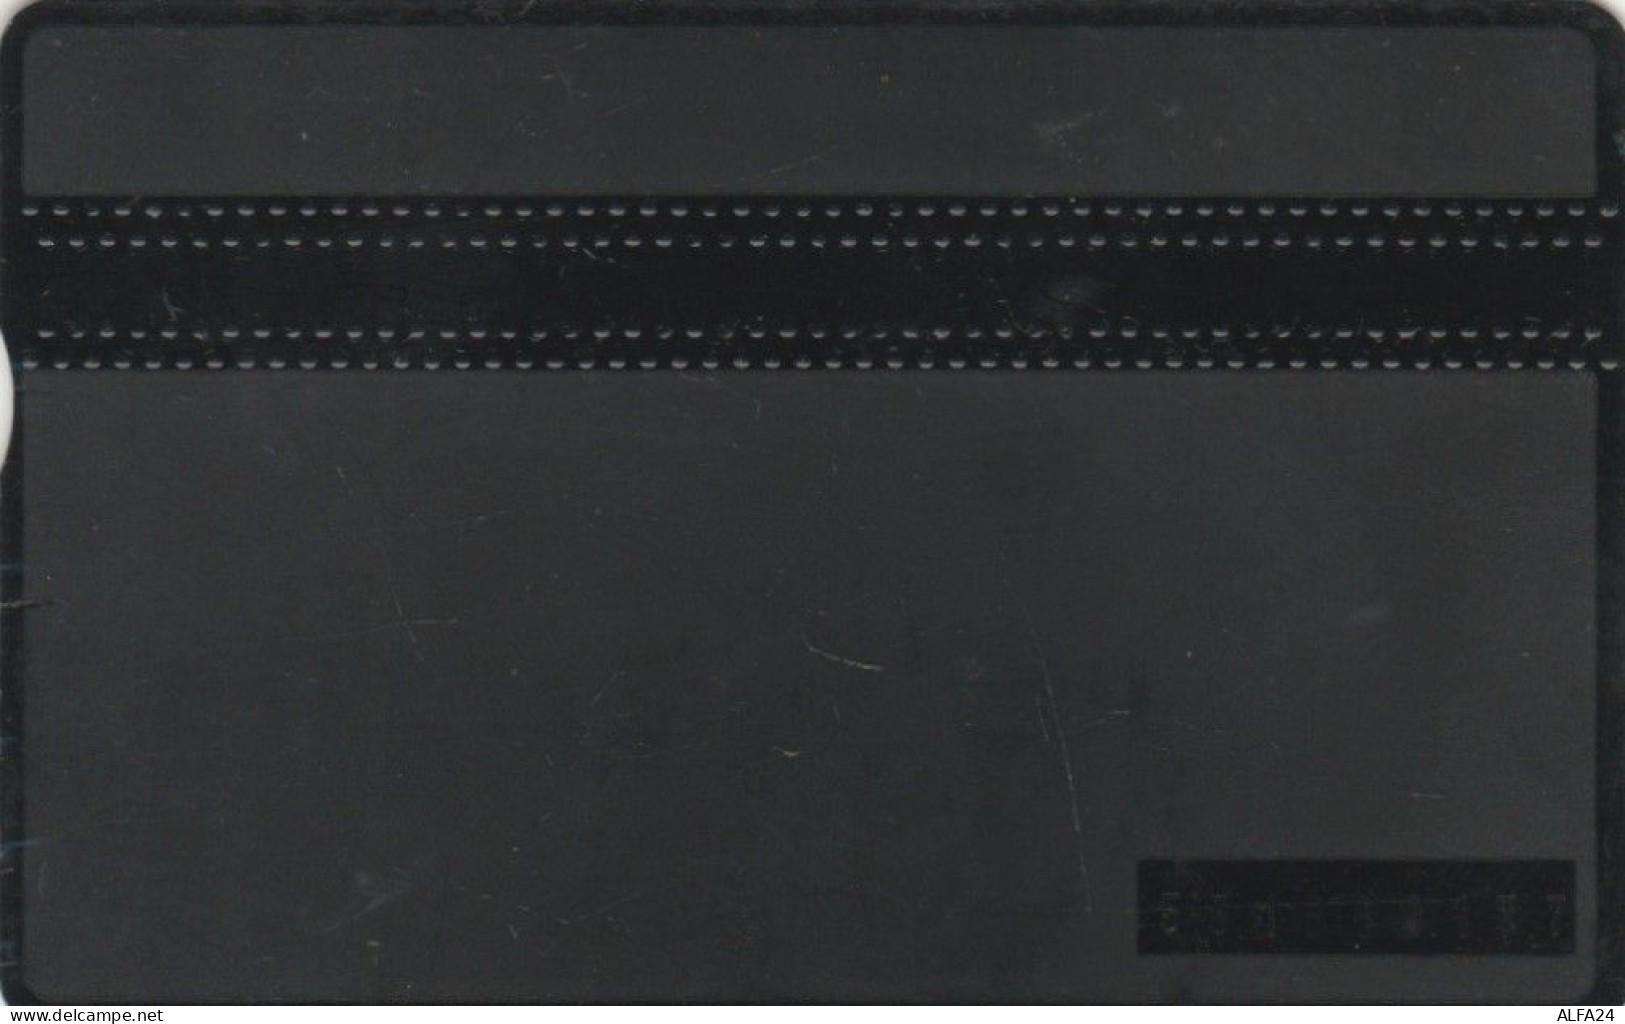 PHONE CARD BELGIO LANDIS (CK6028 - Senza Chip